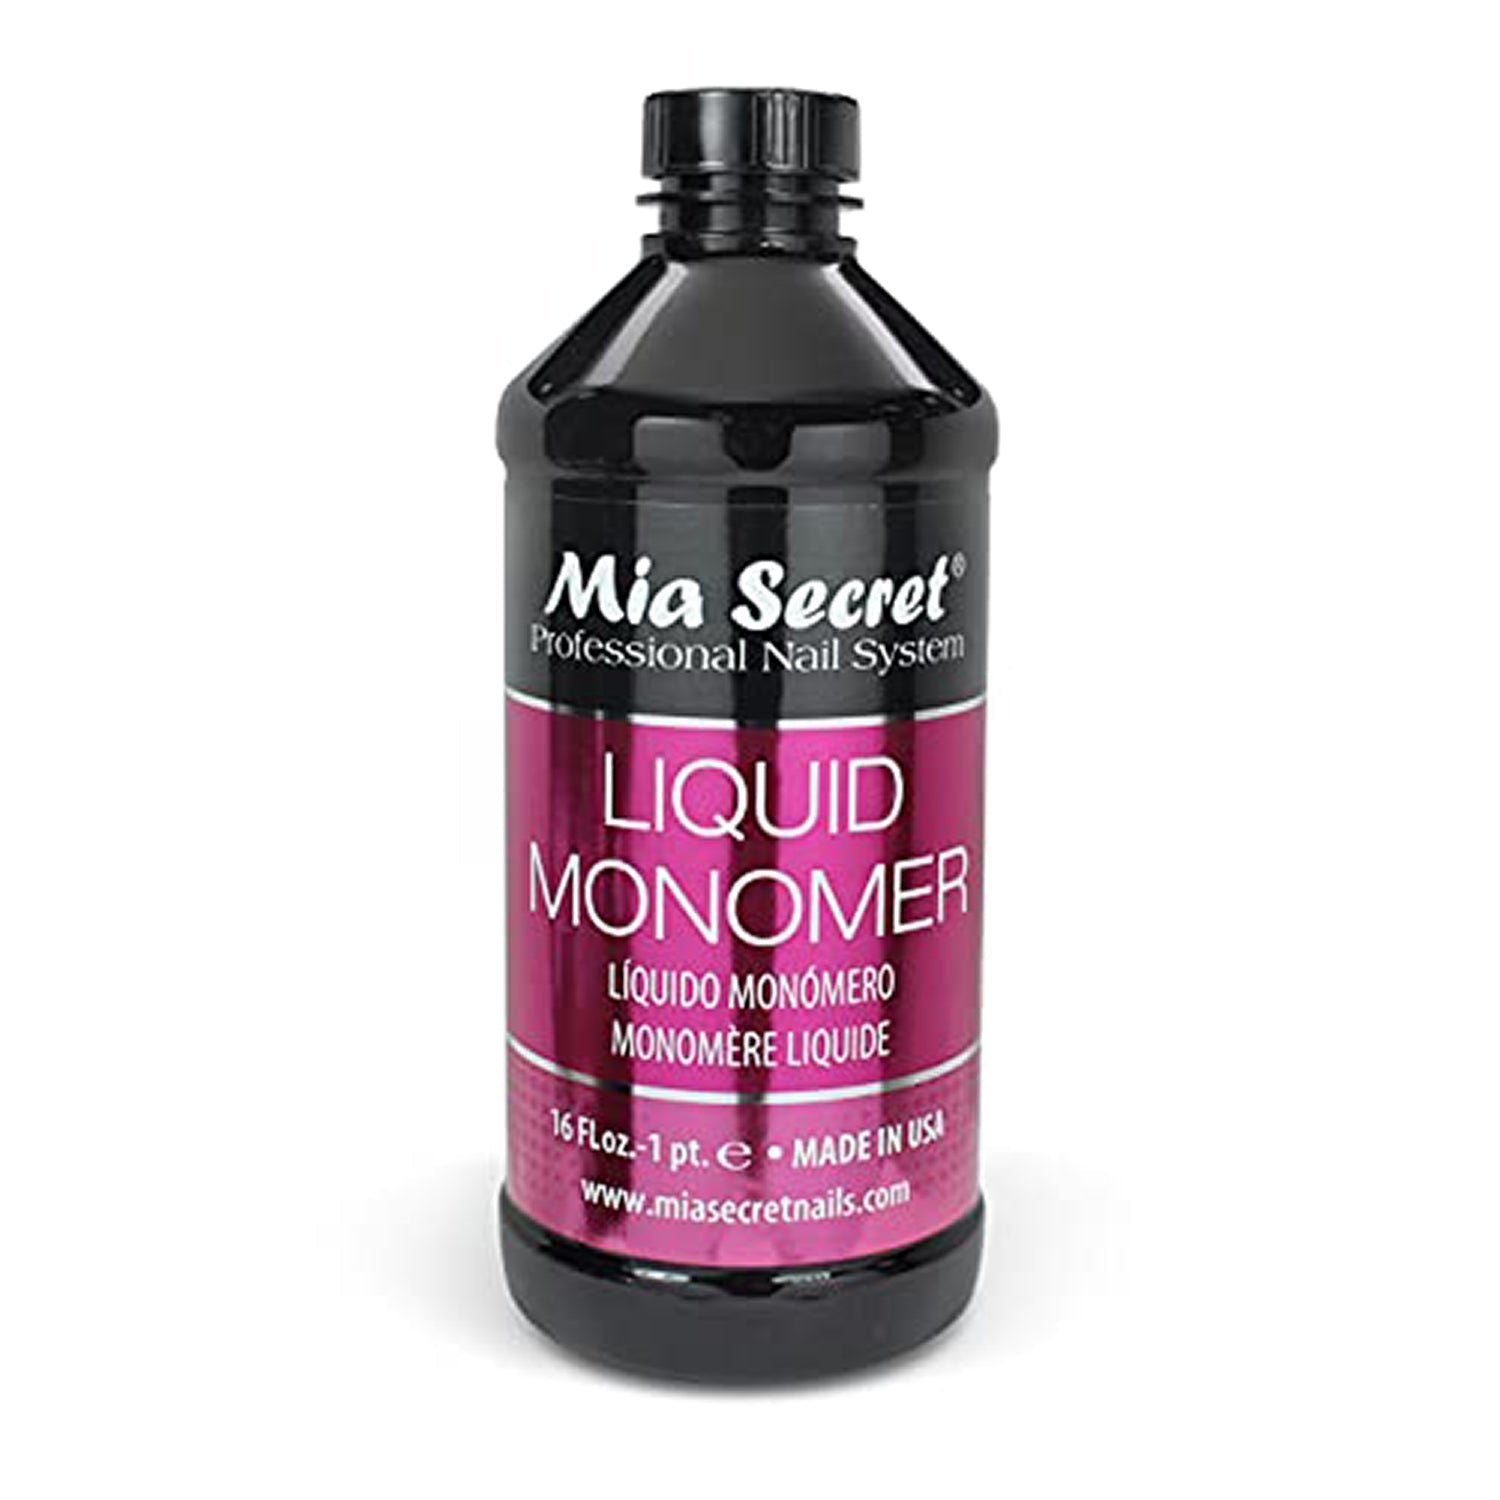  Mia Secret Liquid Monomer - 8oz by Mia Secret sold by DTK Nail Supply